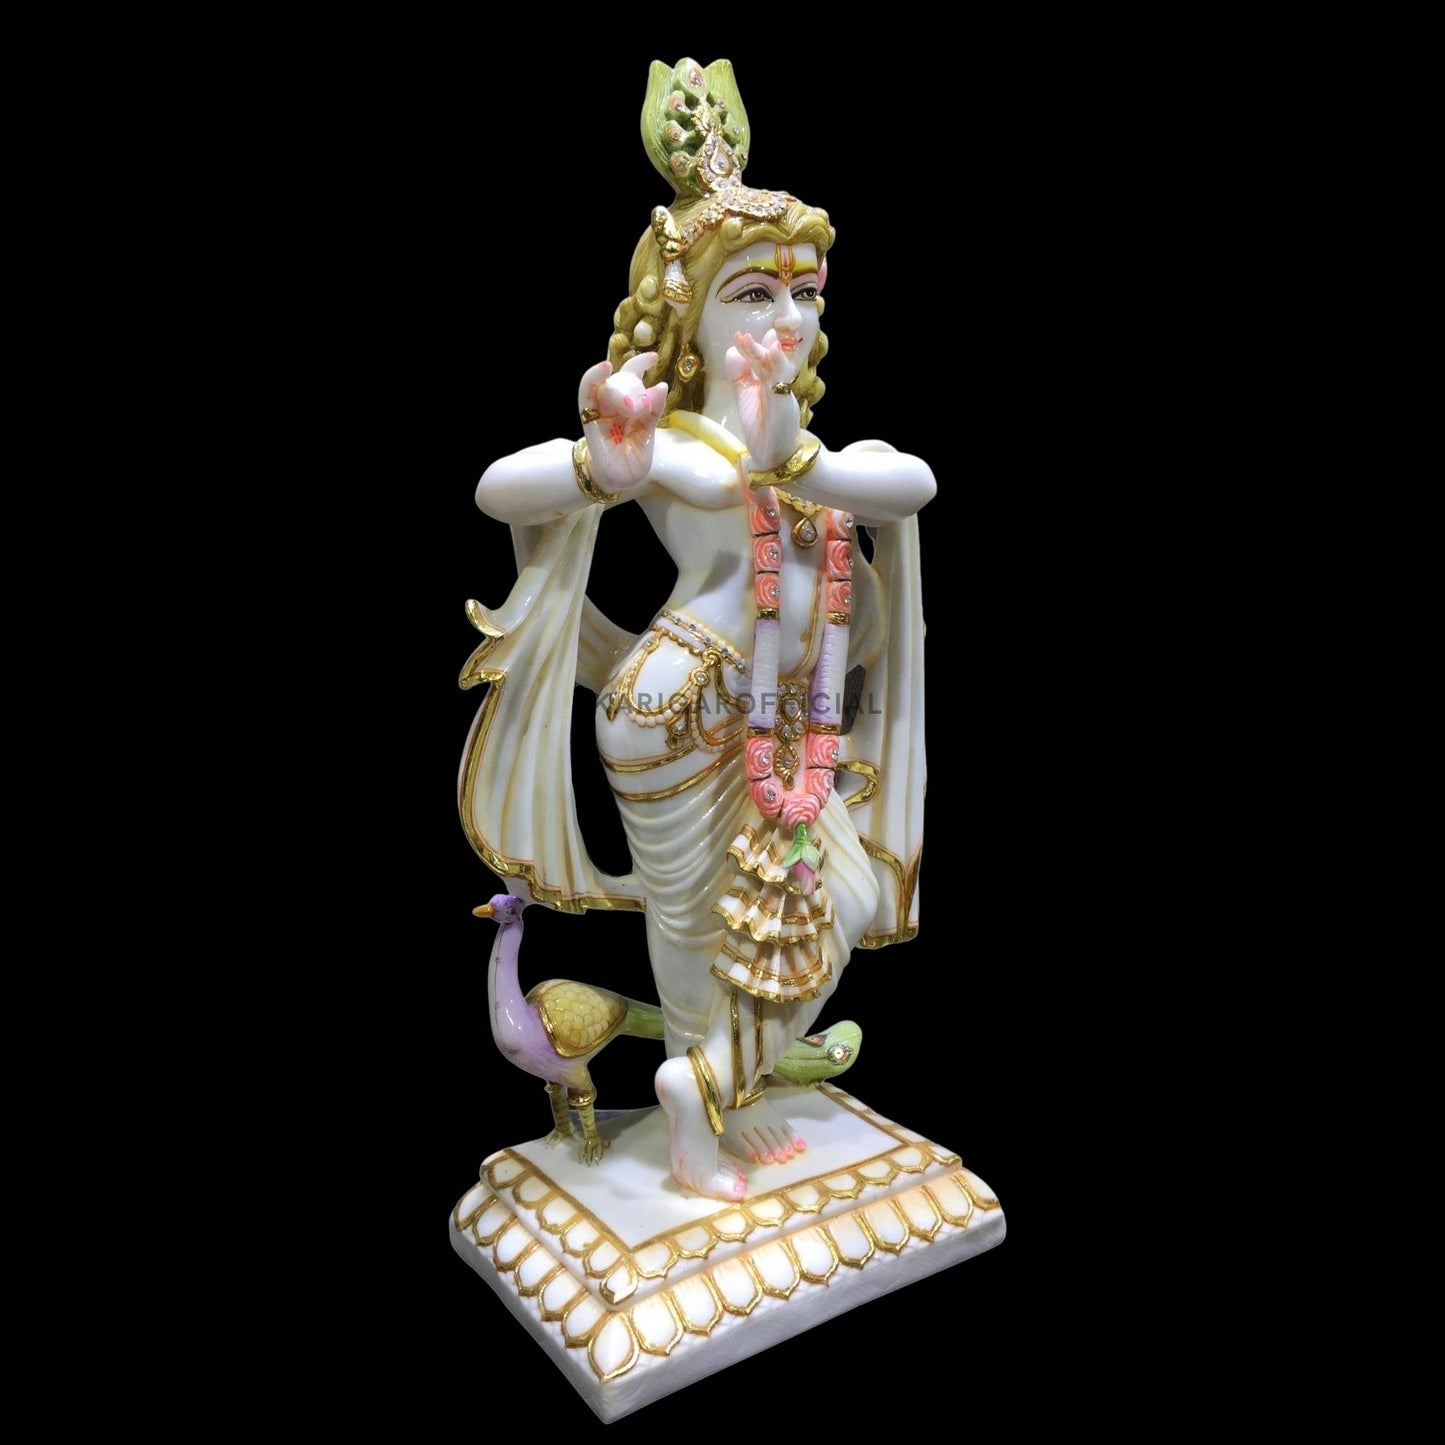 Krishna Statue, Large 24 inches Pink Krishna Idol, Multicolor Marble Krishna Figurine, Hindu God Handpainted Murlimanohar Murti, Home Temple Pooja Sculpture Housewarming